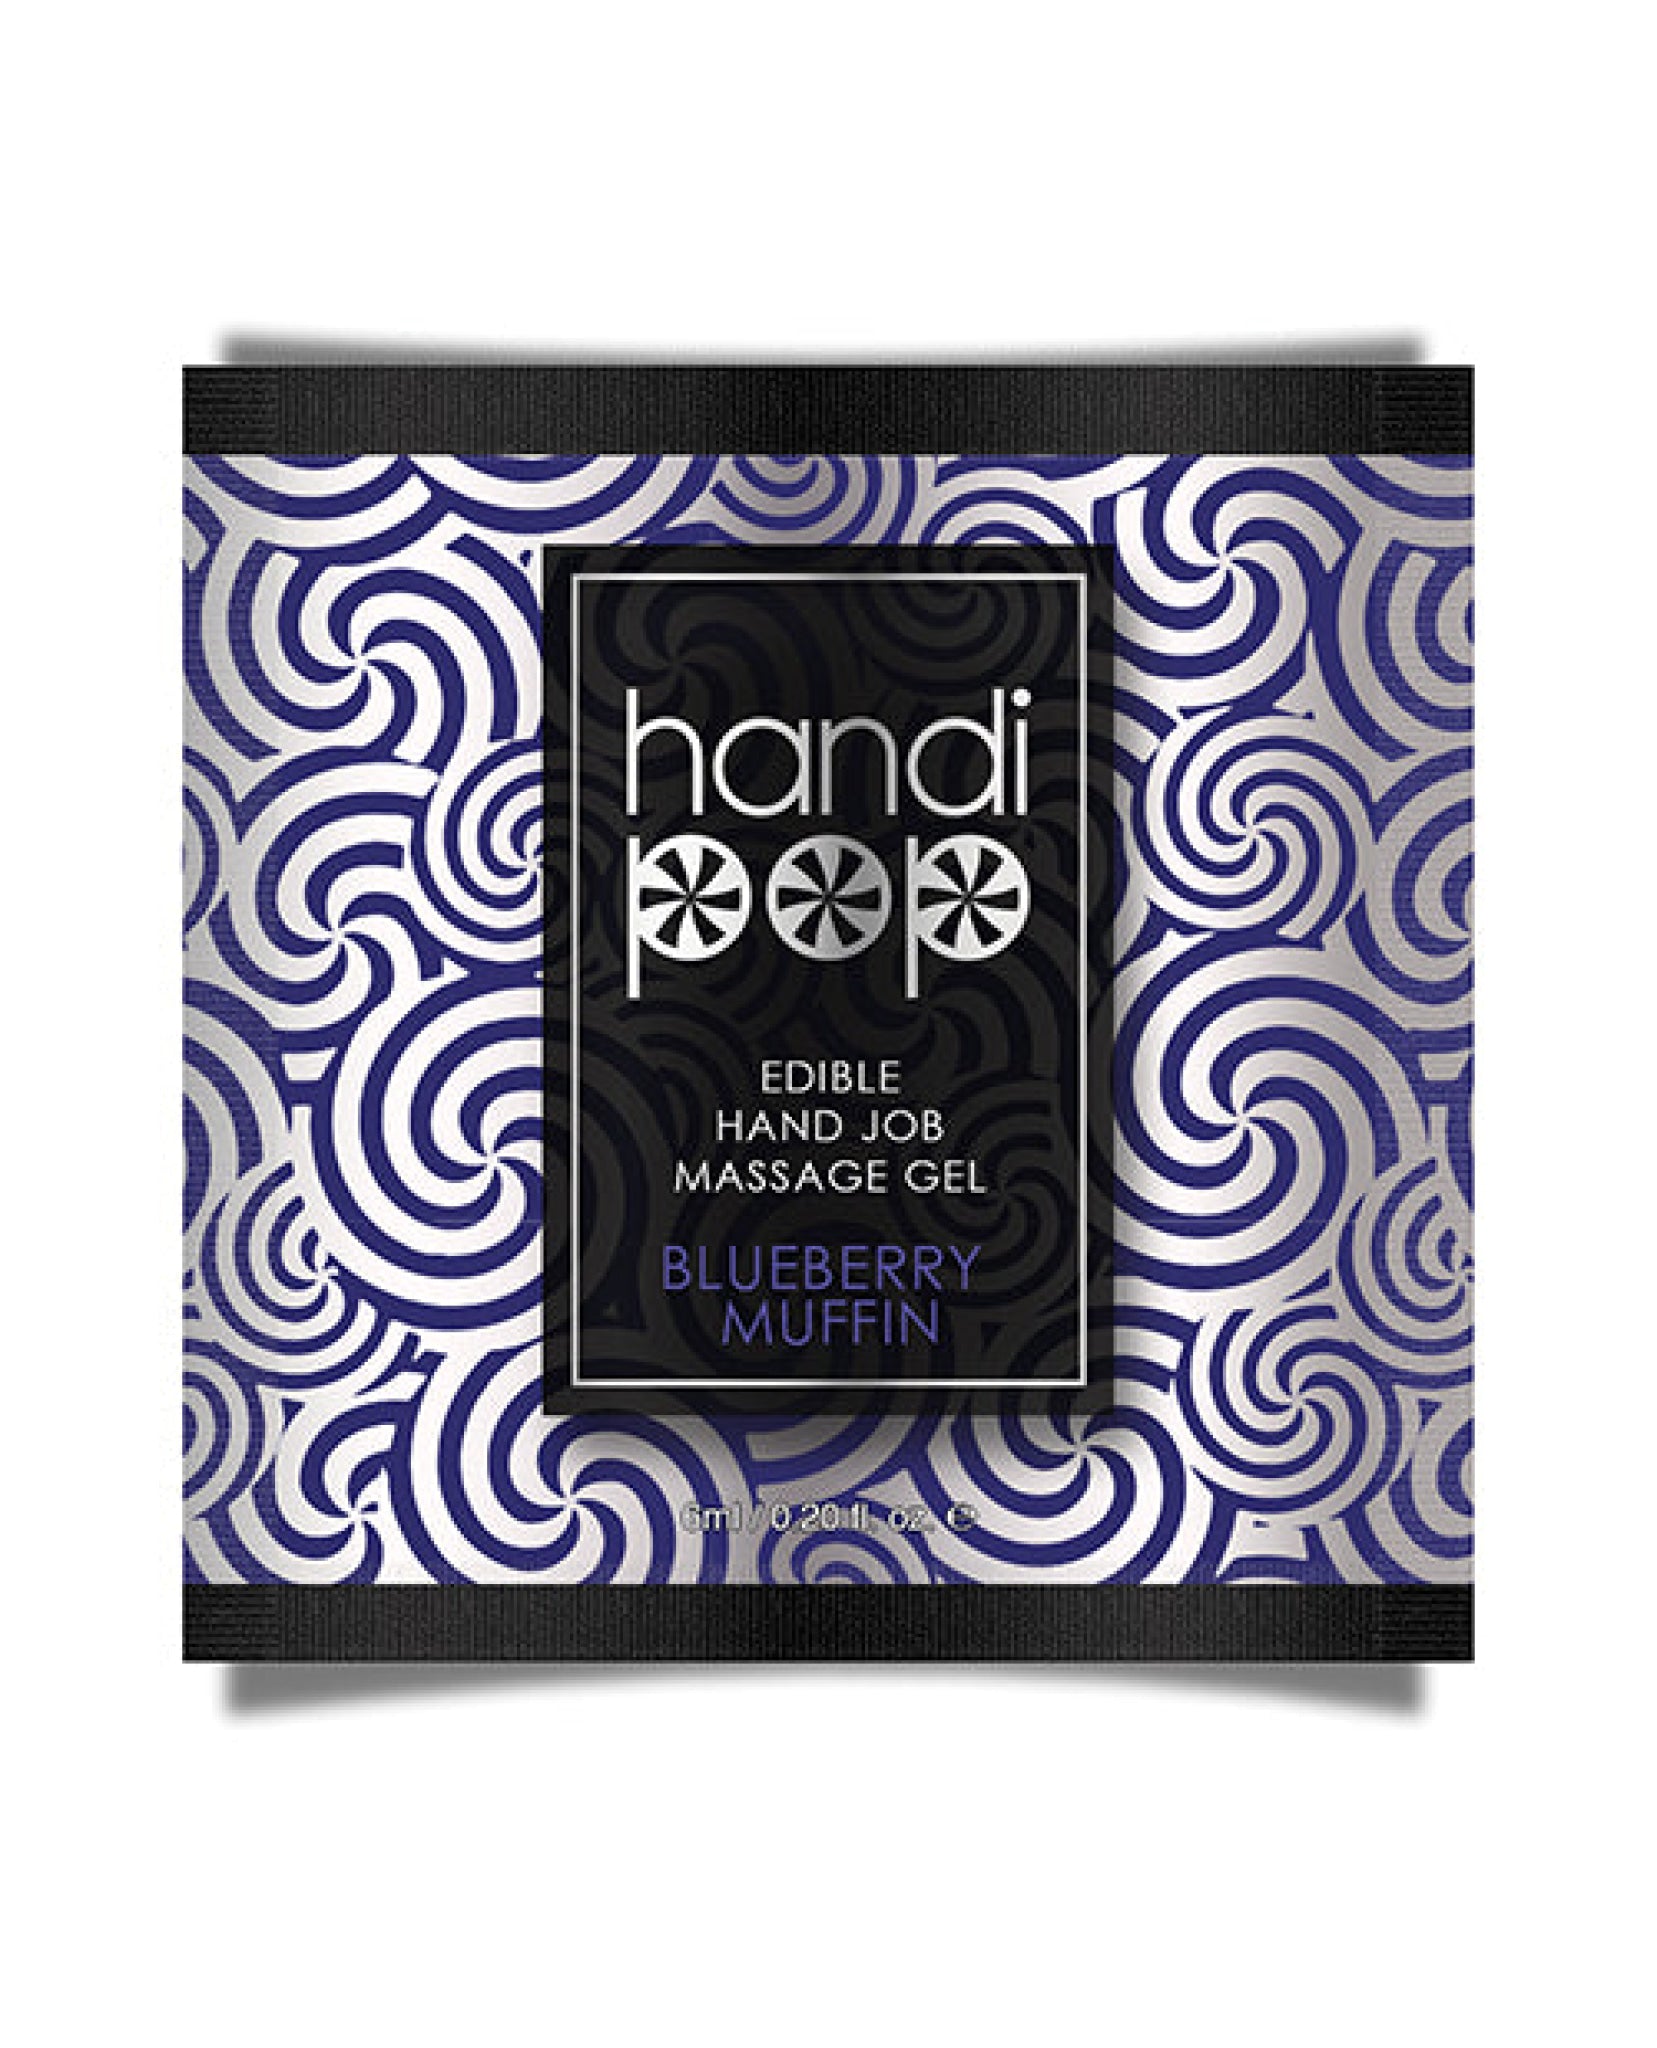 Handipop Hand Job Massage Gel Single Use Packet - 6 Ml Blueberry Muffin Sensuva